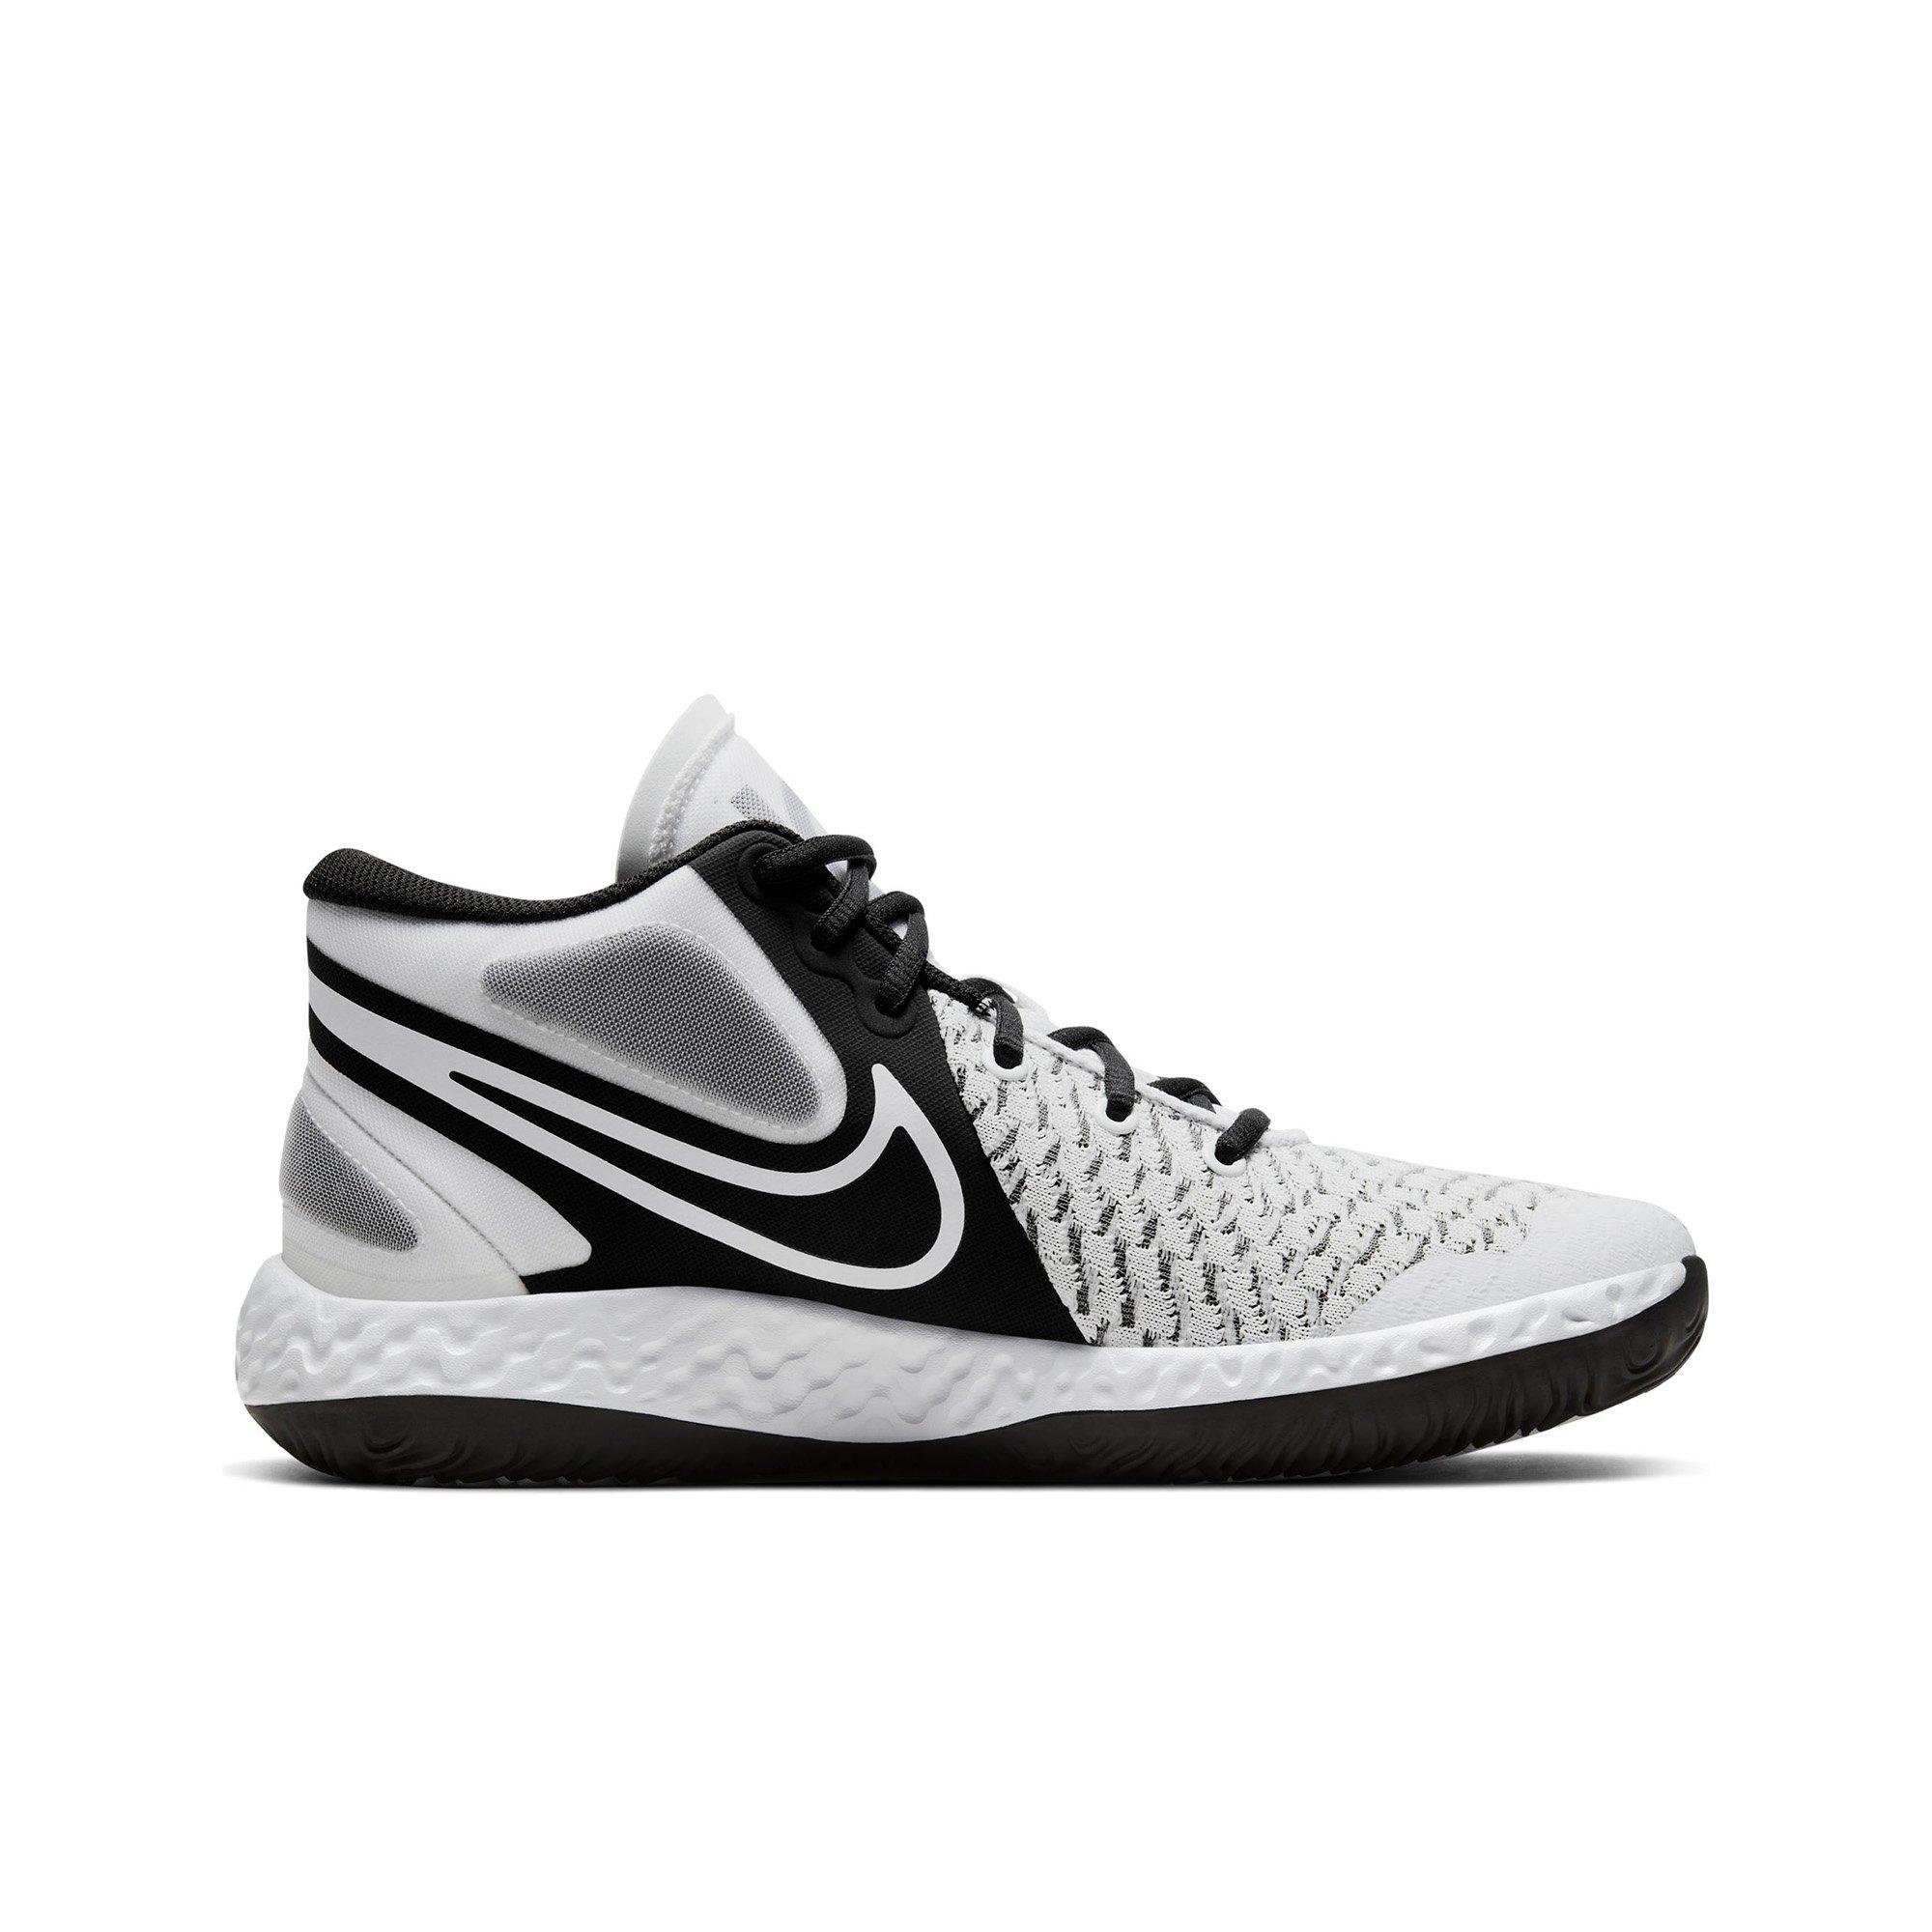 kd basketball shoes white